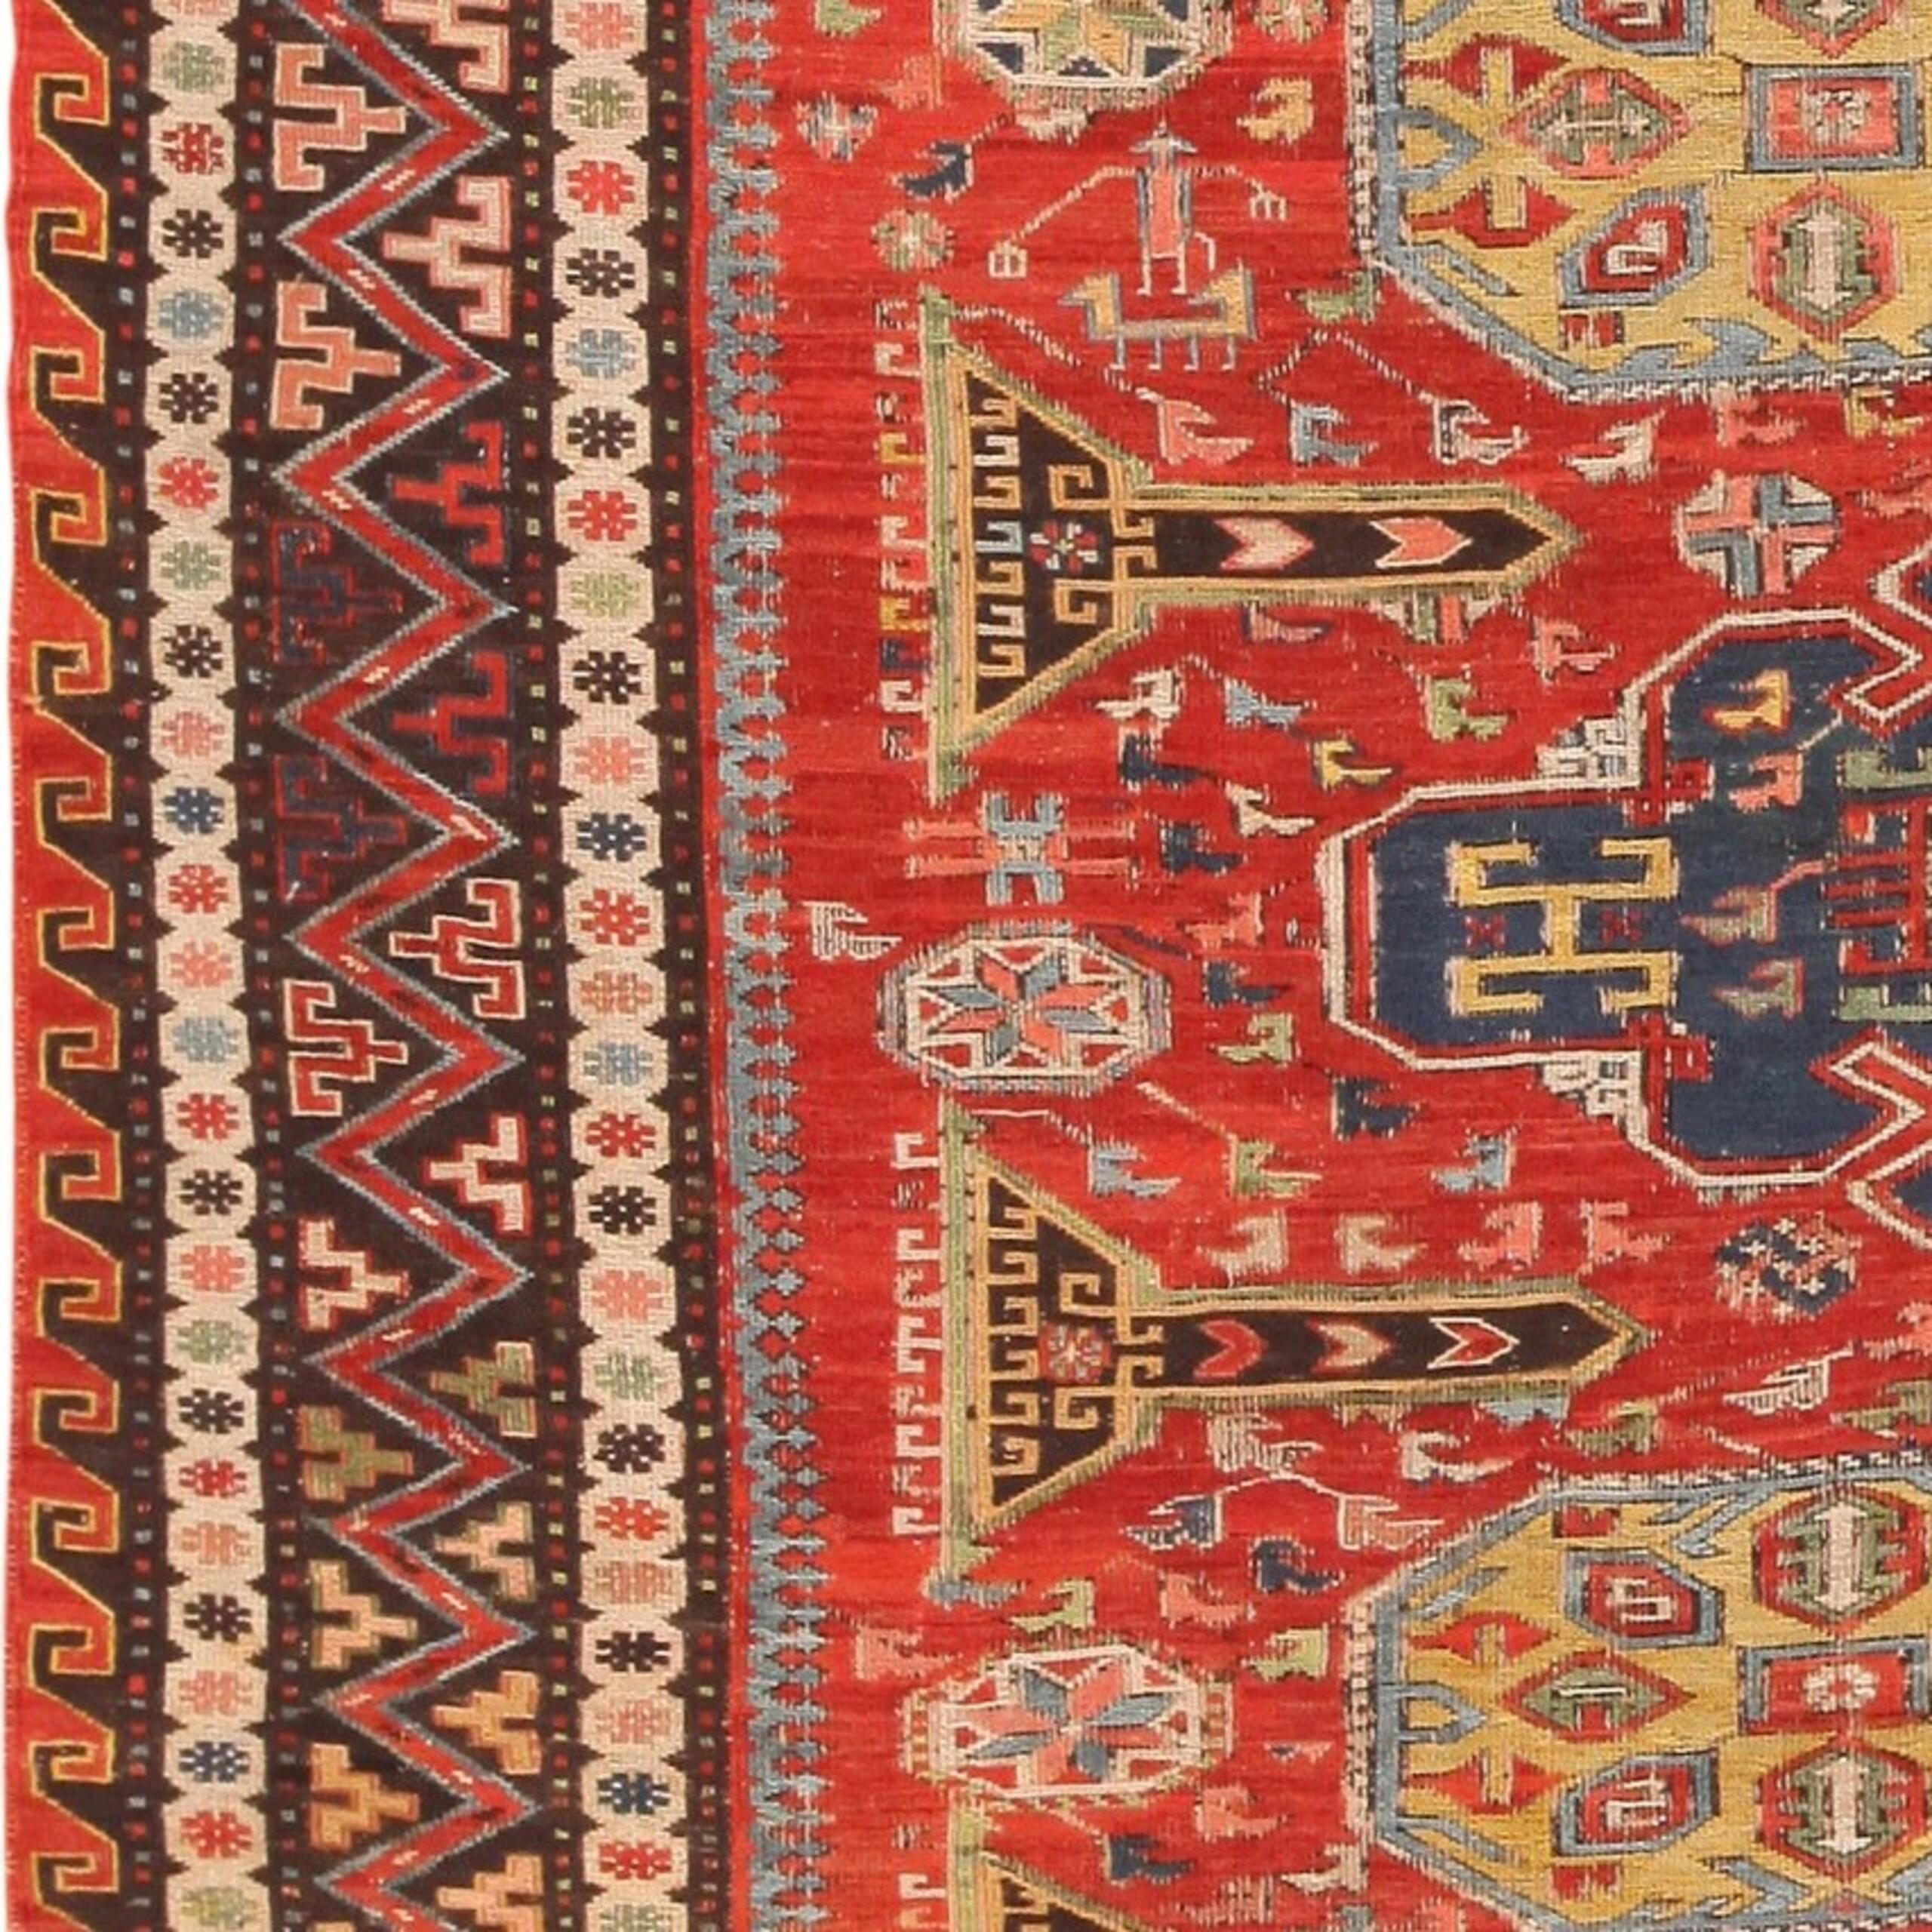 Hand-Woven Antique Caucasian Soumak Rug. Size: 7 ft 4 in x 9 ft 6 in